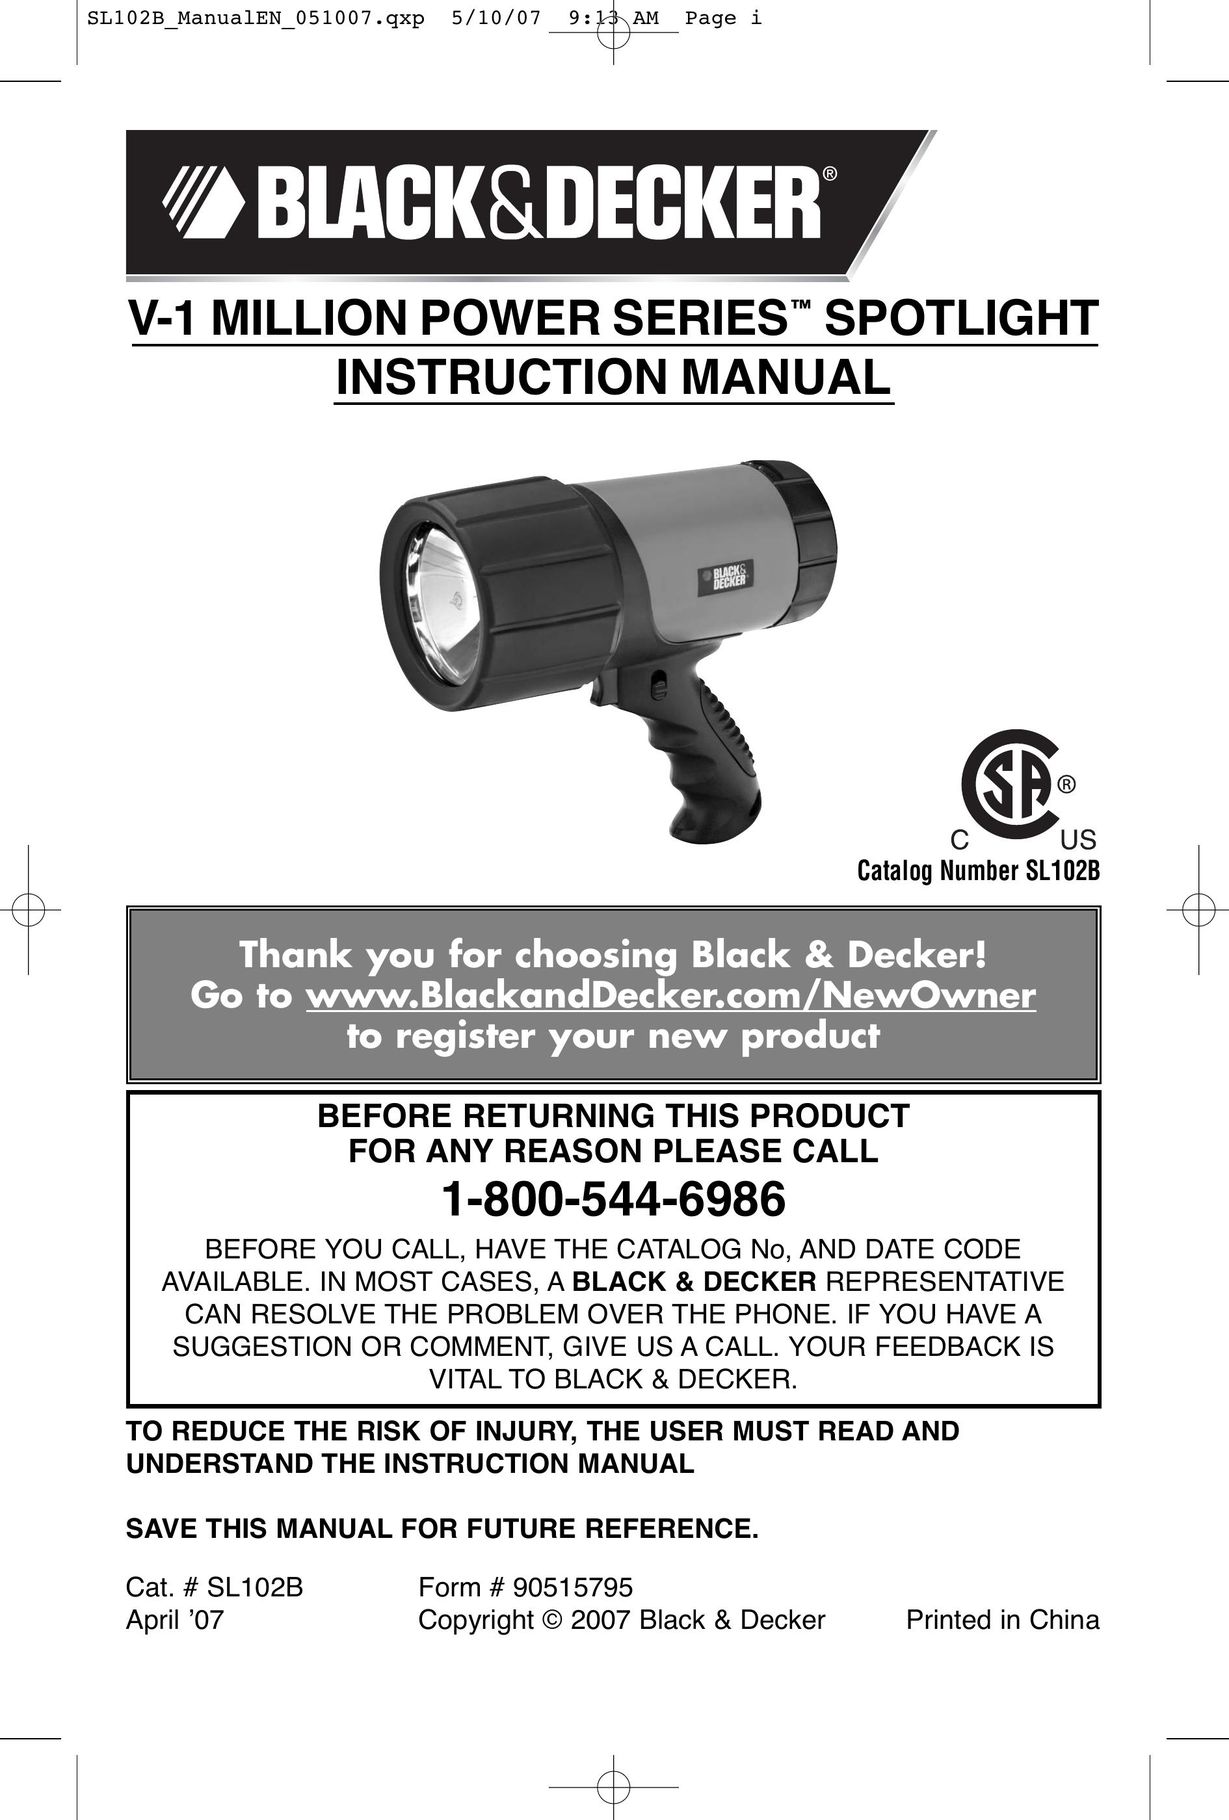 Black & Decker 90515795 Work Light User Manual